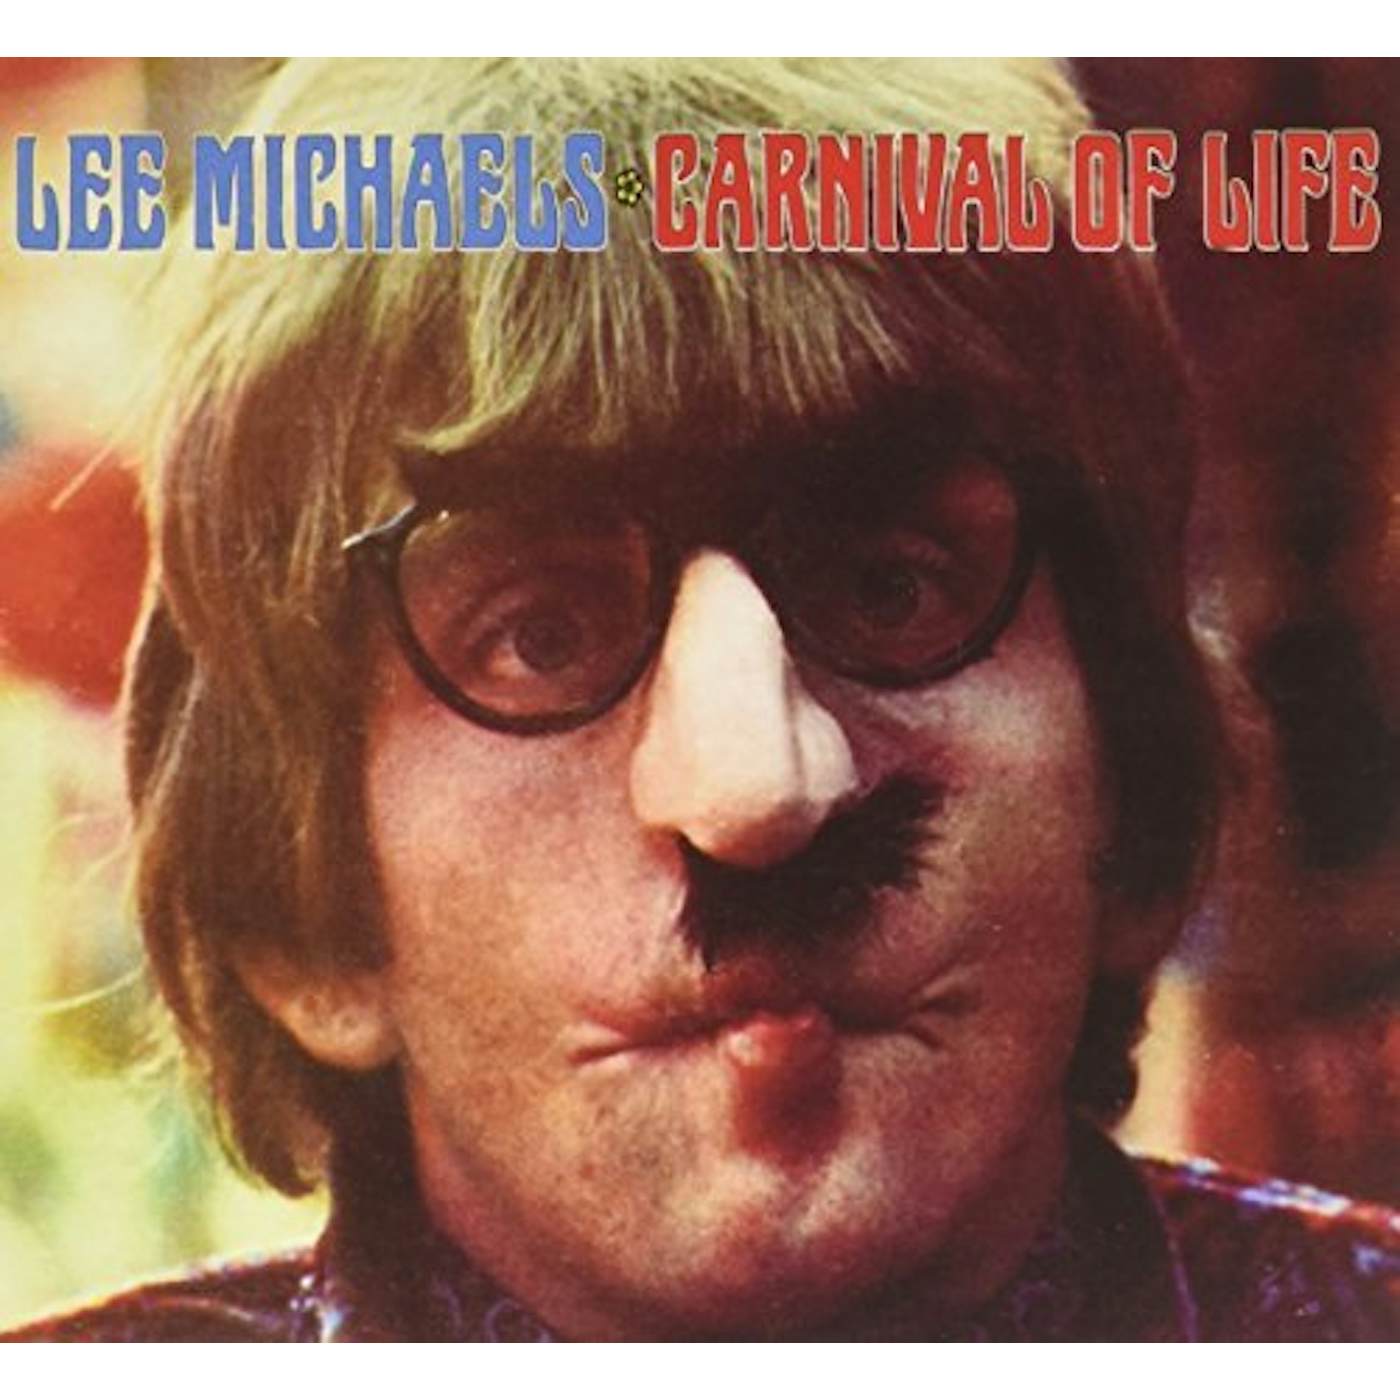 Lee Michaels CARNIVAL OF LIFE CD